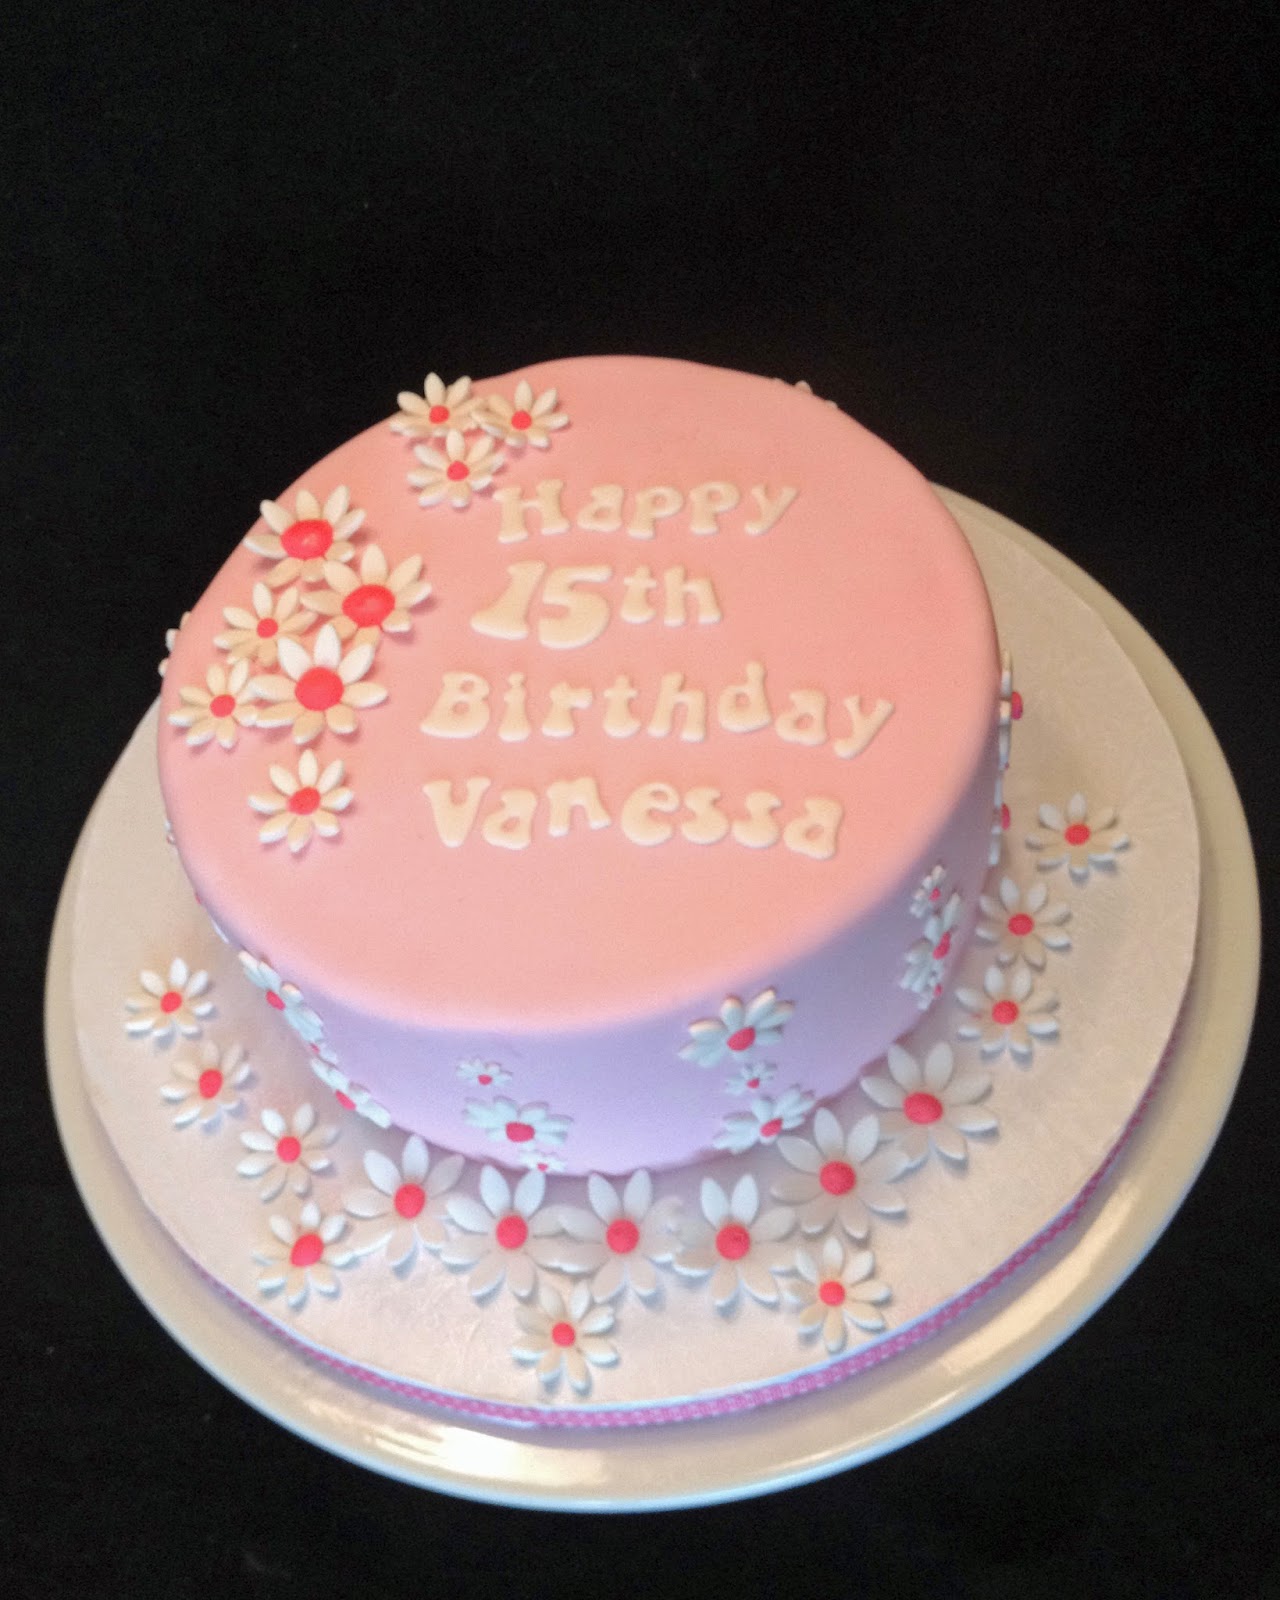 Pretty Pink and White Birthday Cake for Vanessa